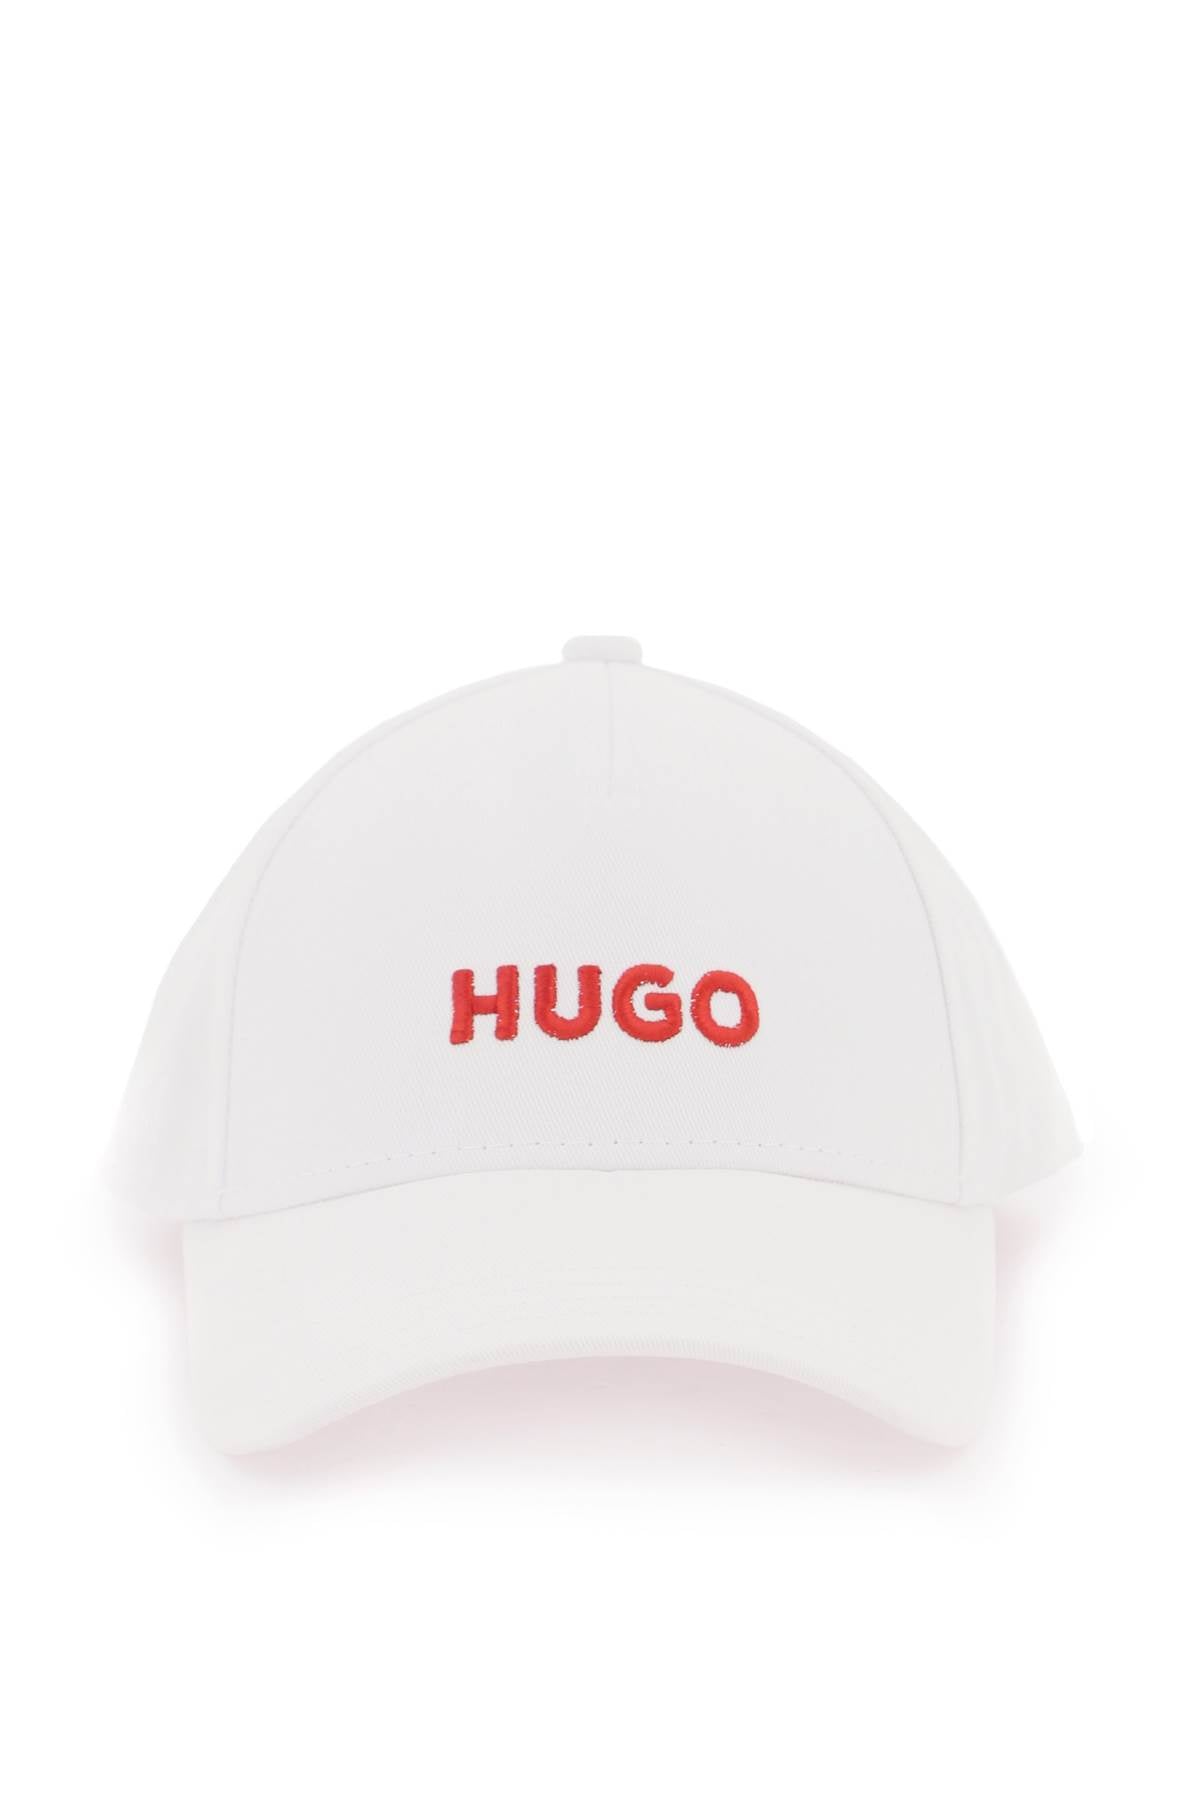 Hugo baseball Station – cap Italy embroidered logo with